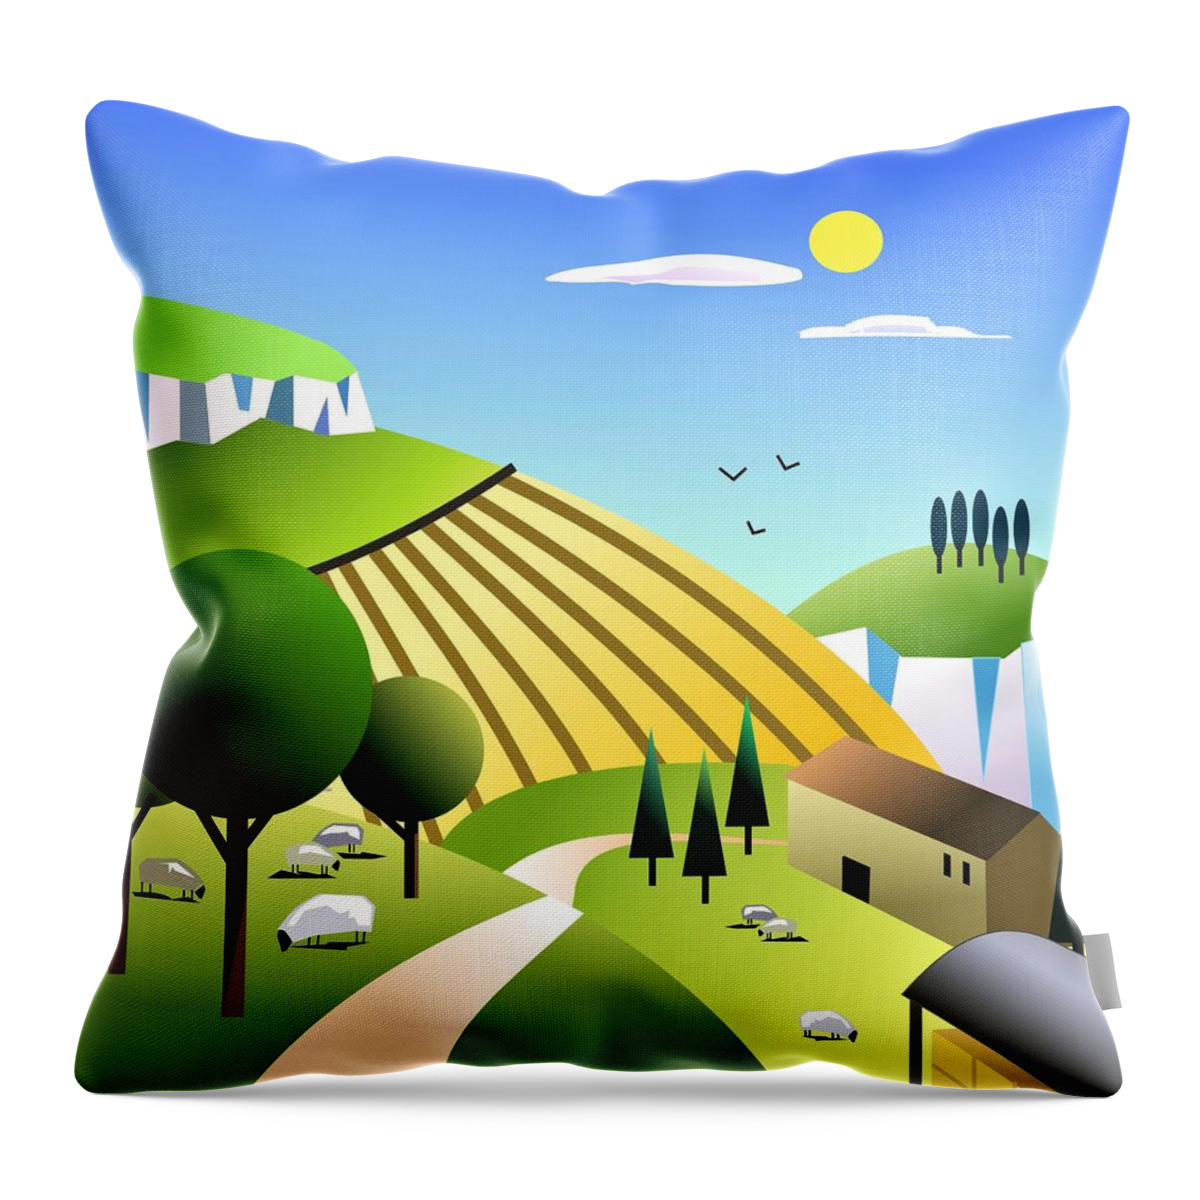 Landscape Throw Pillow featuring the digital art Joe's Farm by Fatline Graphic Art